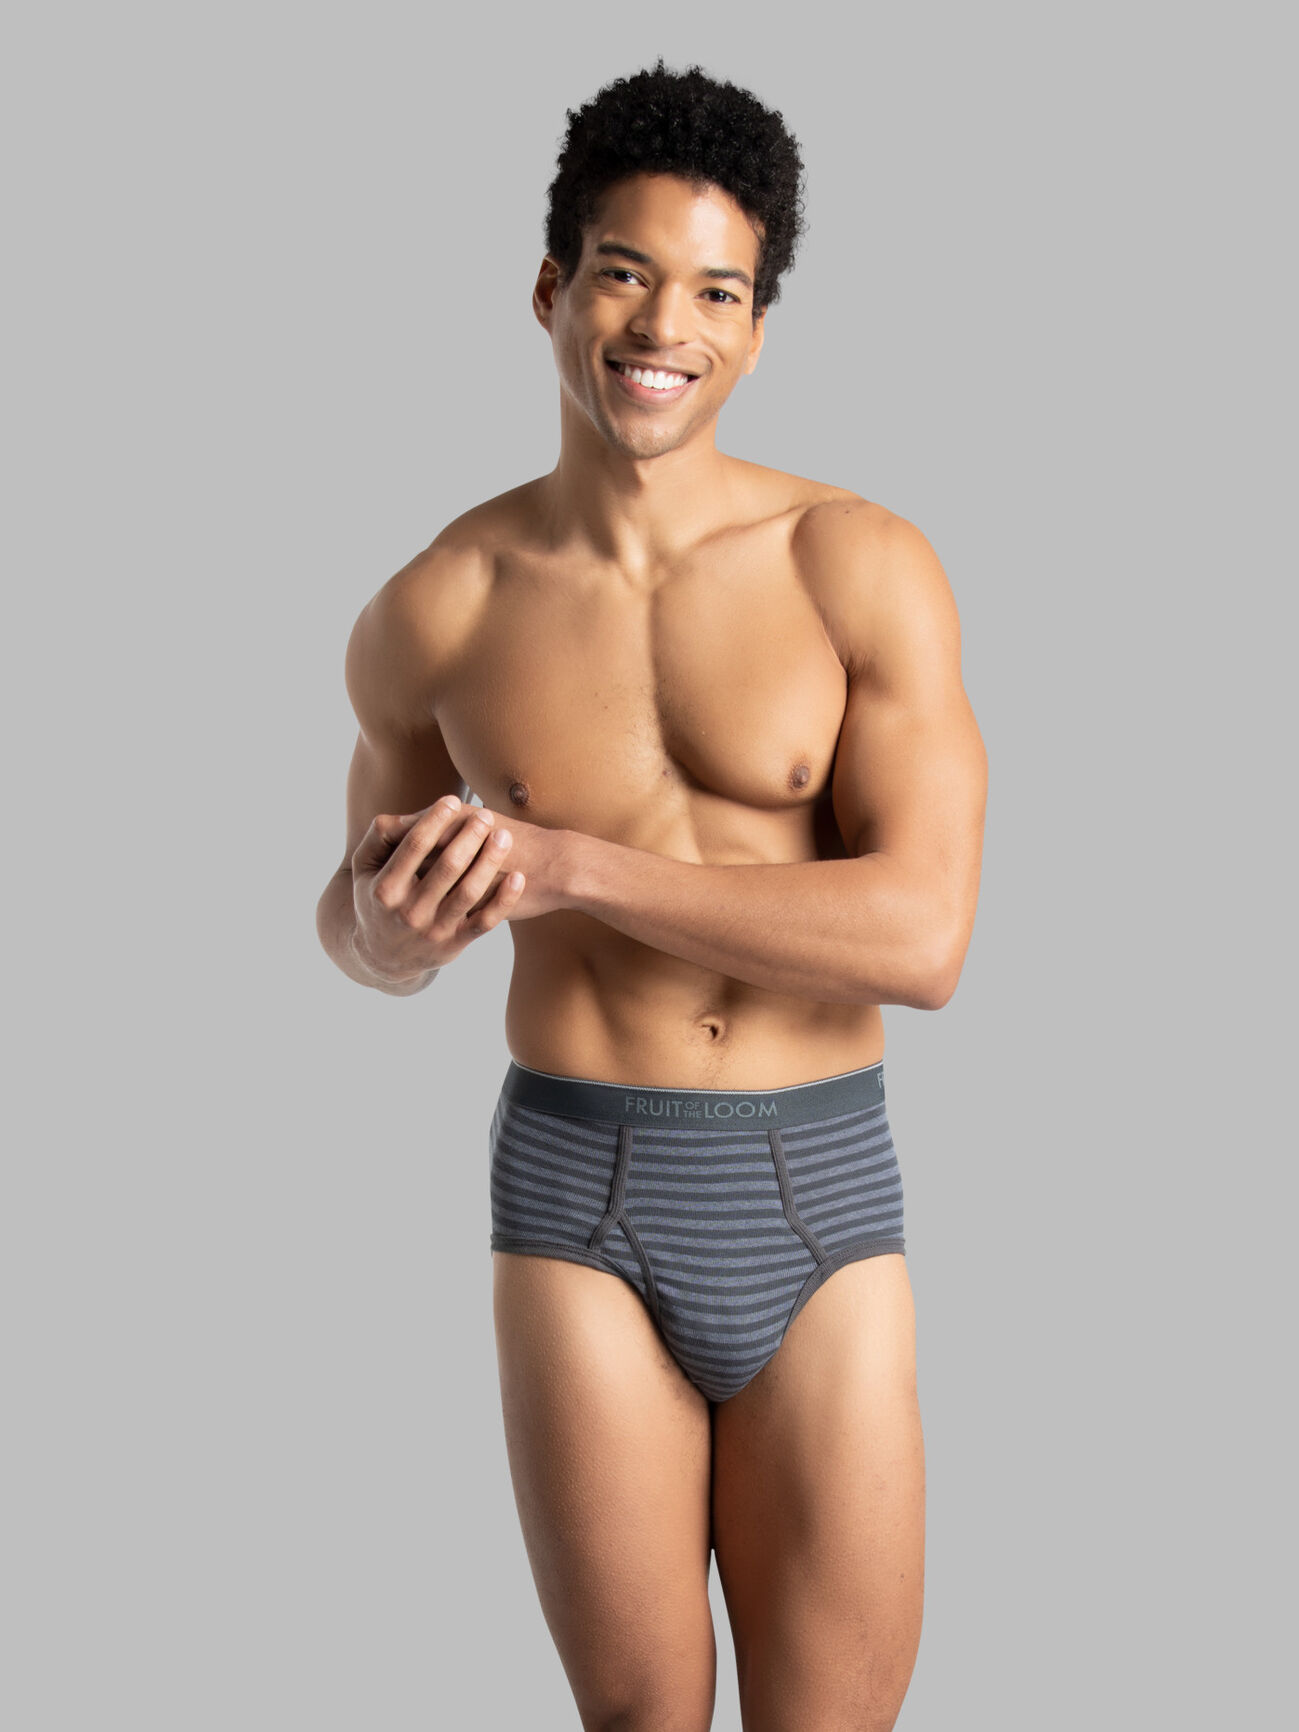 Men's Underwear Briefs Star Figure Mid-waist Men's Boxer Panties Breathable